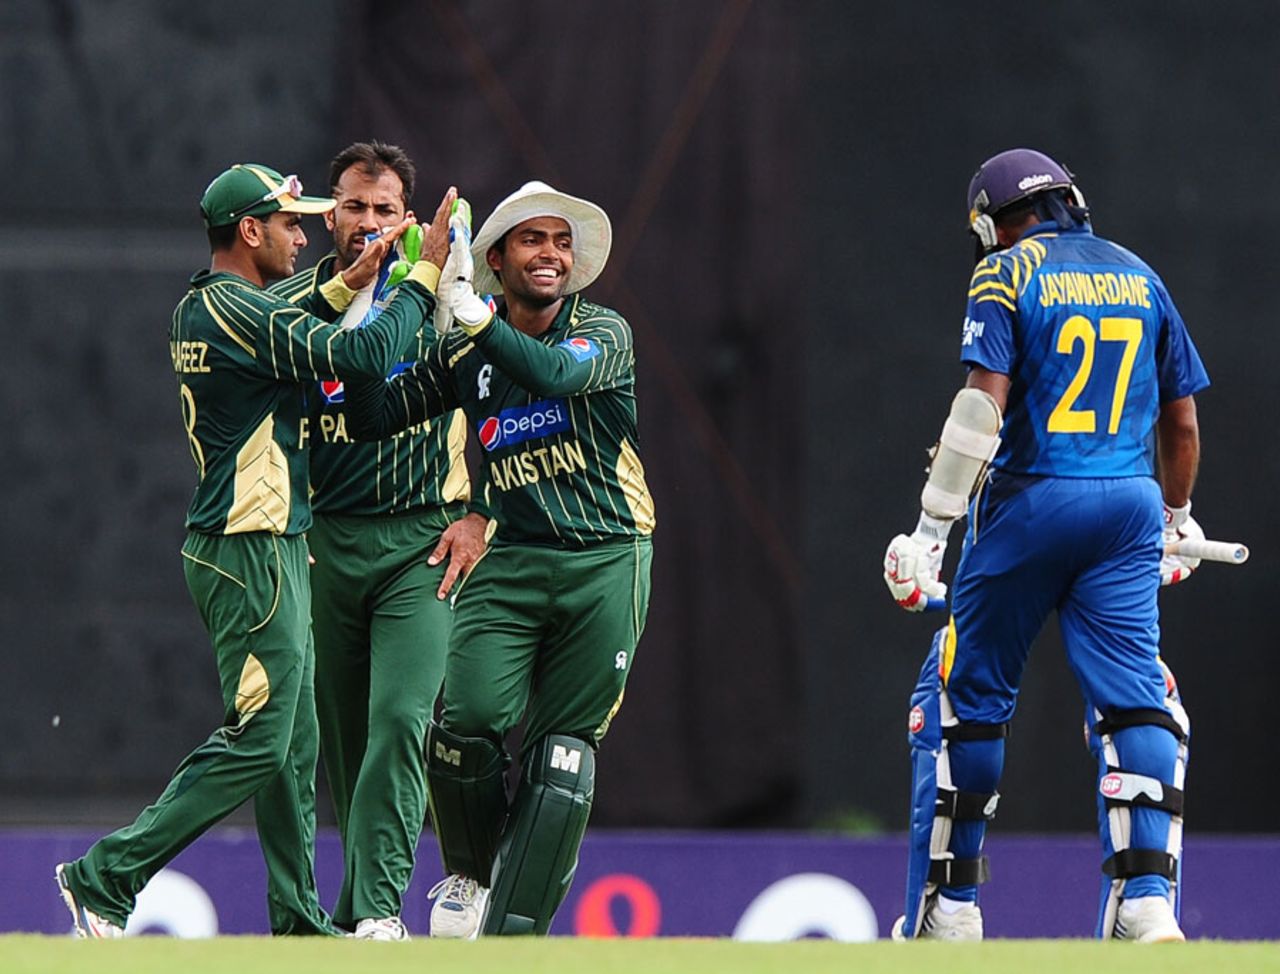 The Pakistan players celebrate the run-out of Mahela Jayawardene, Sri Lanka v Pakistan, 1st ODI, Hambantota, August 23, 2014